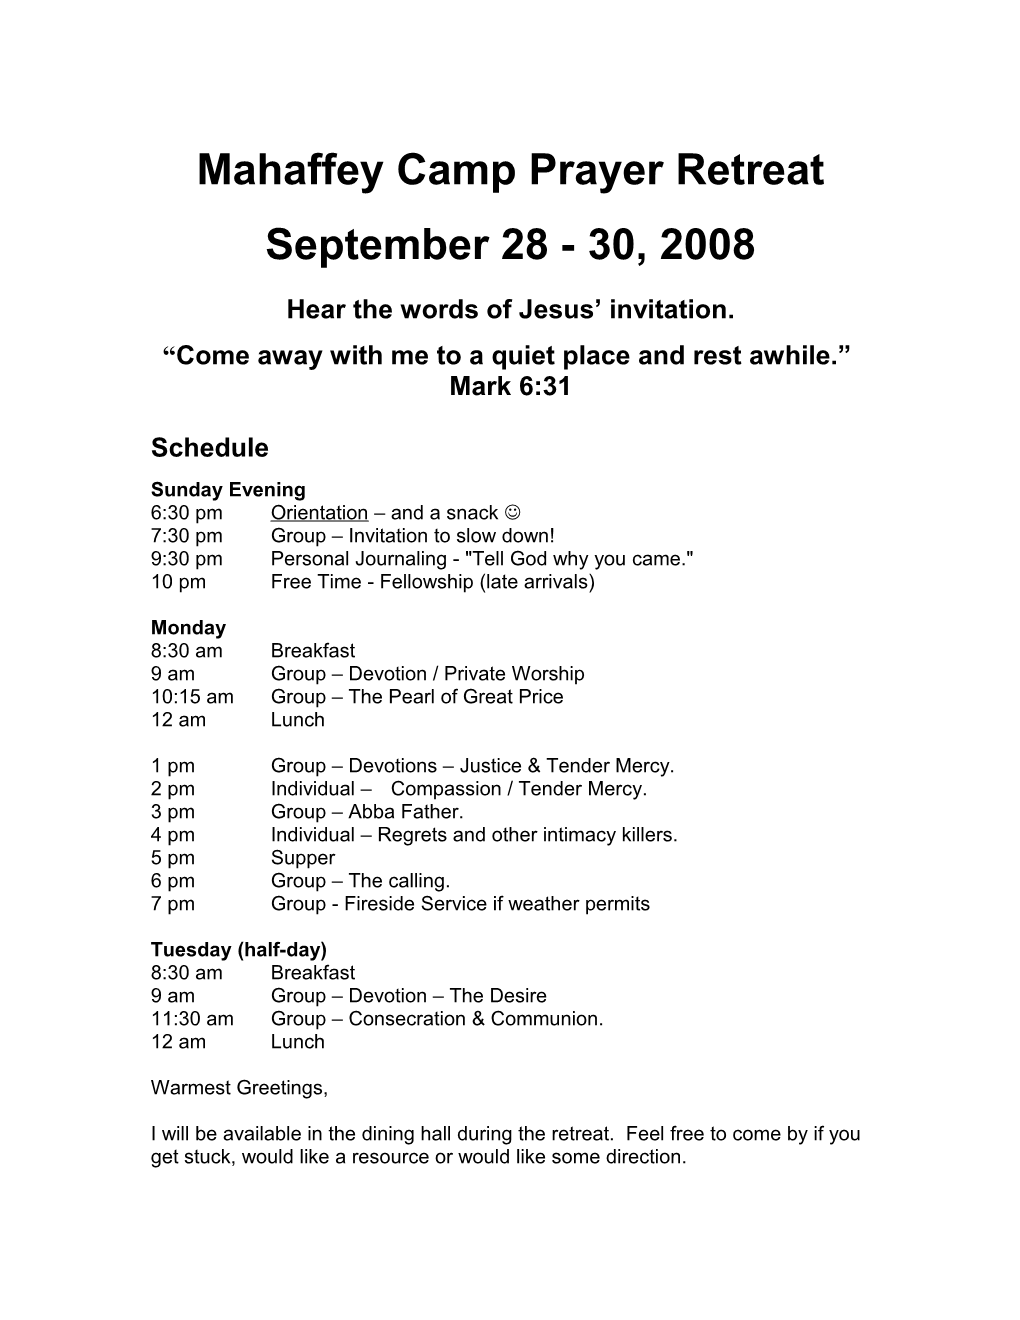 Mahaffey Camp Prayer Retreat August 21 -23, 2005